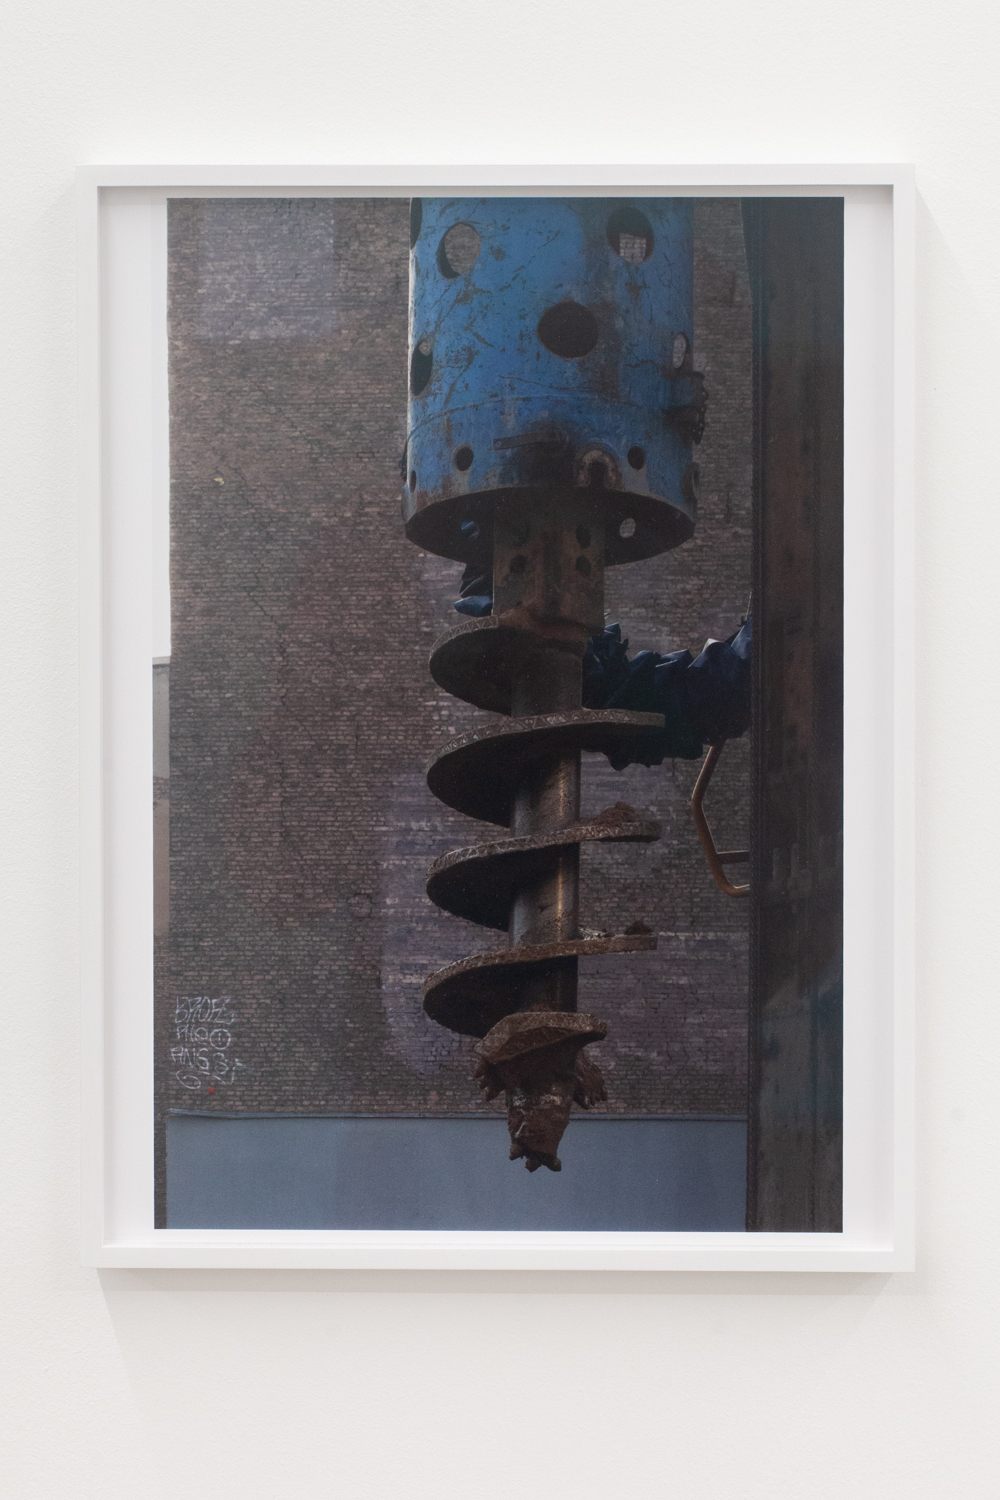 Paul Hutchinson, woher kommen diese maschinen (II), 2020, Framed C-Print, 40 x 30 cm, Edition of 8 + 2 AP